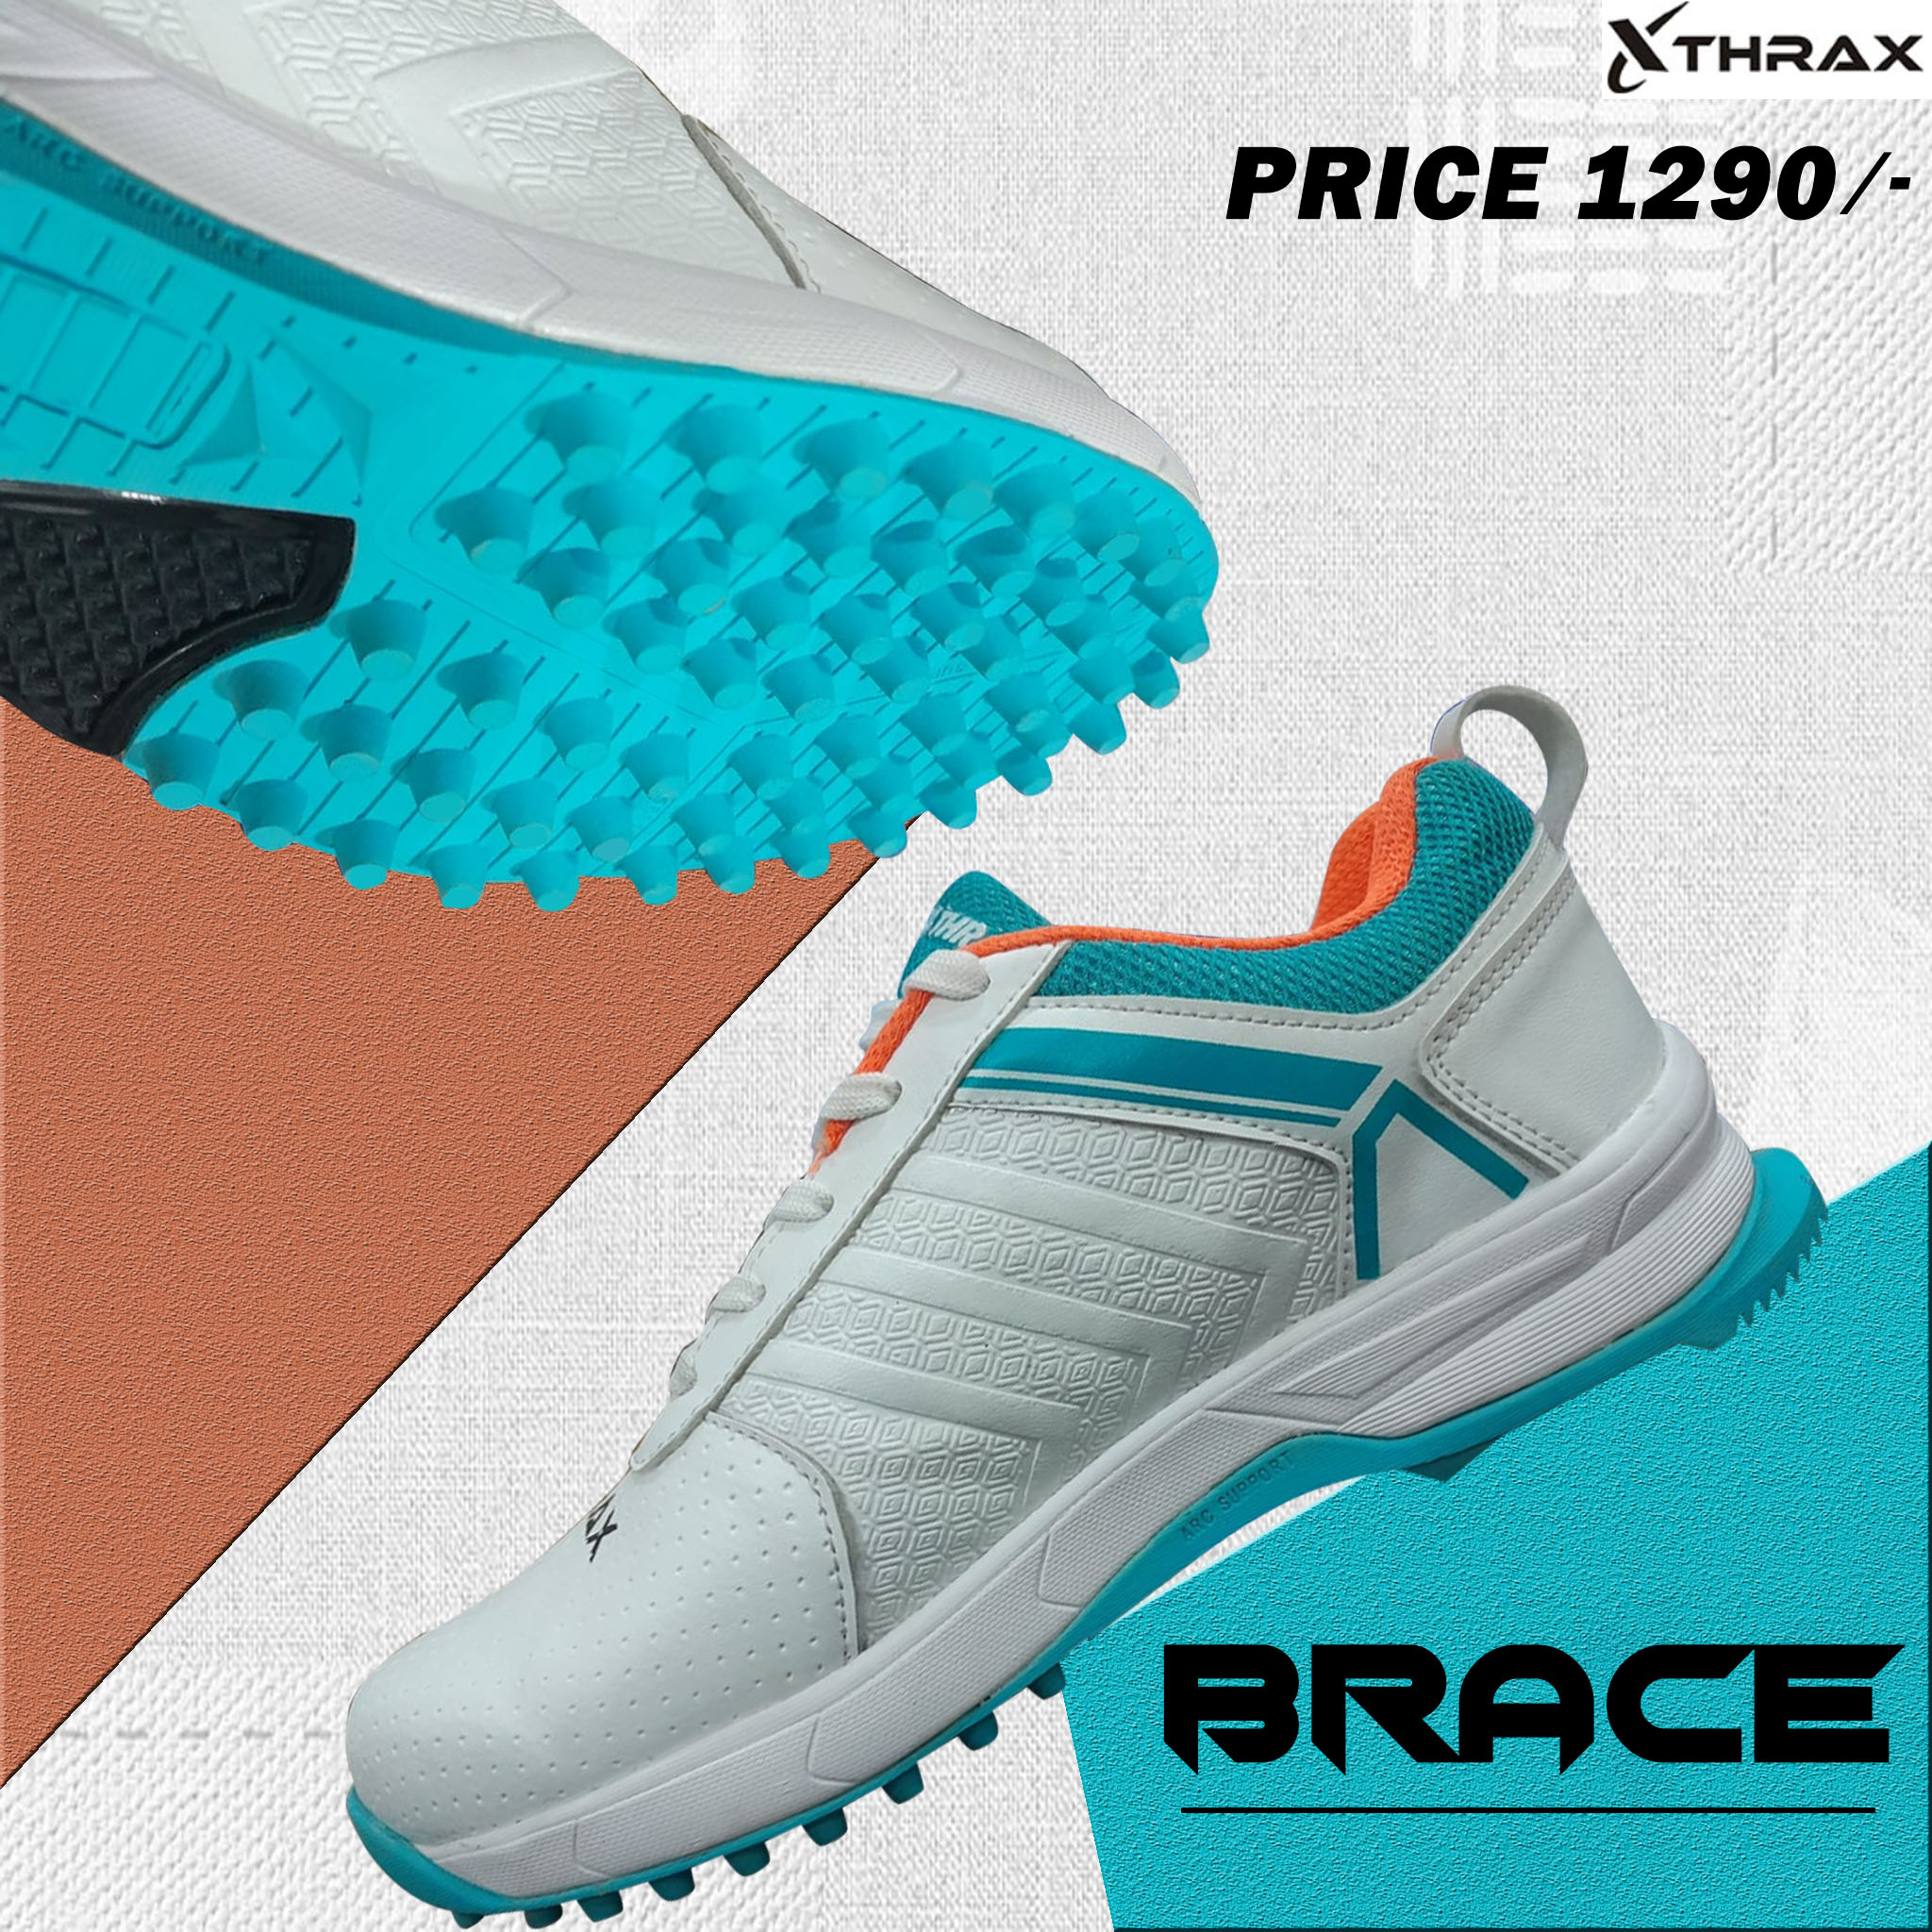 Thrax Brace Rubber Cricket Stud Shoes White Turquoise Orange